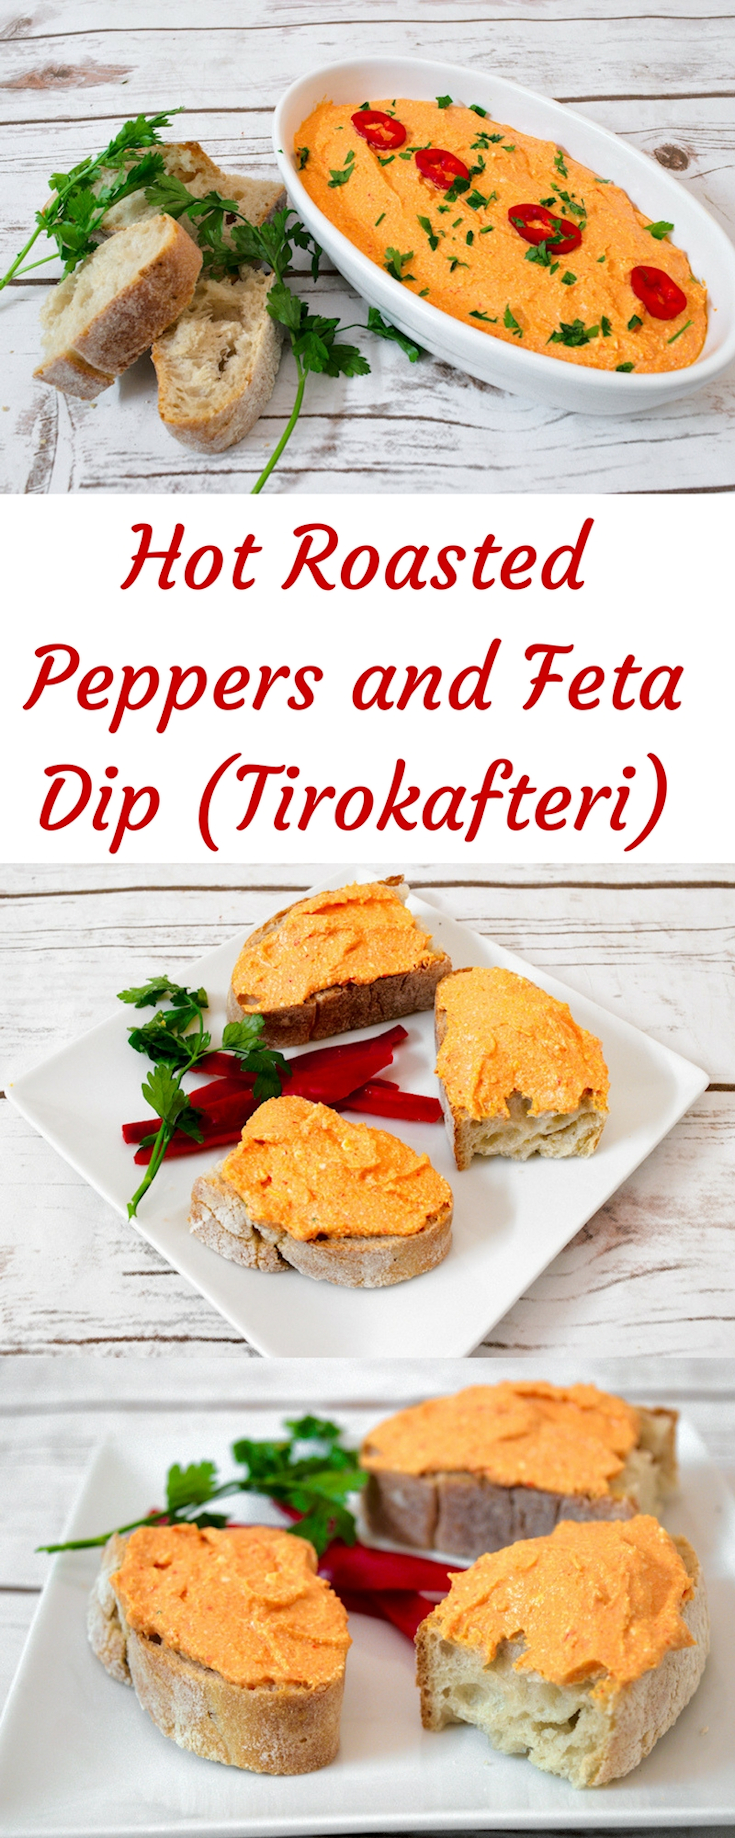 Hot Roasted Peppers and Feta Spread (Tirokafteri)